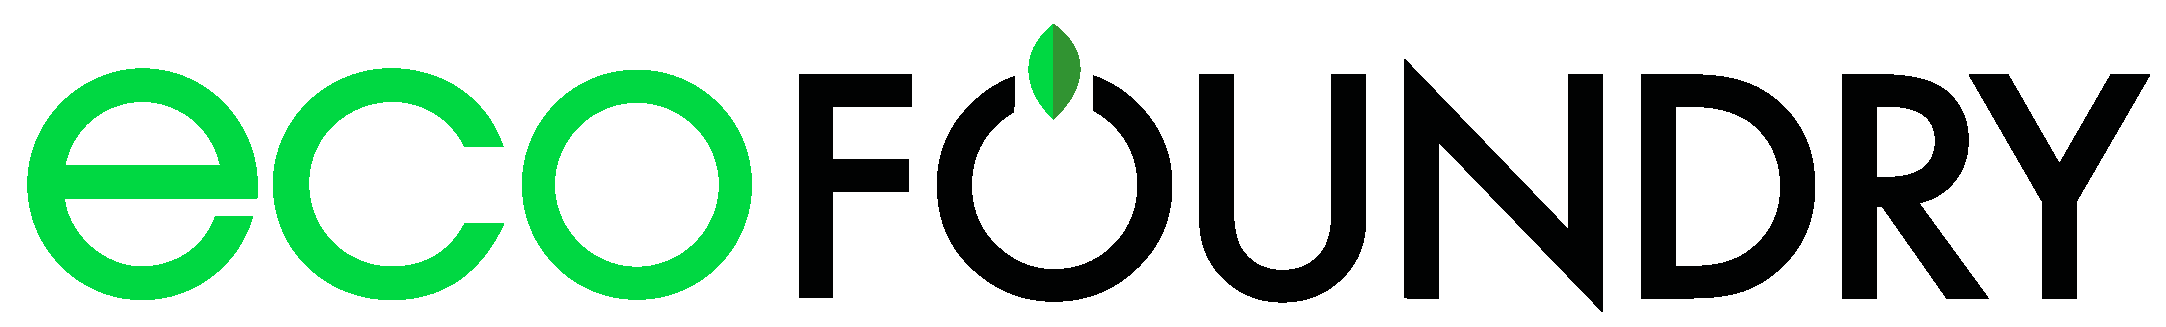 Eco Foundry logo 1 (1)